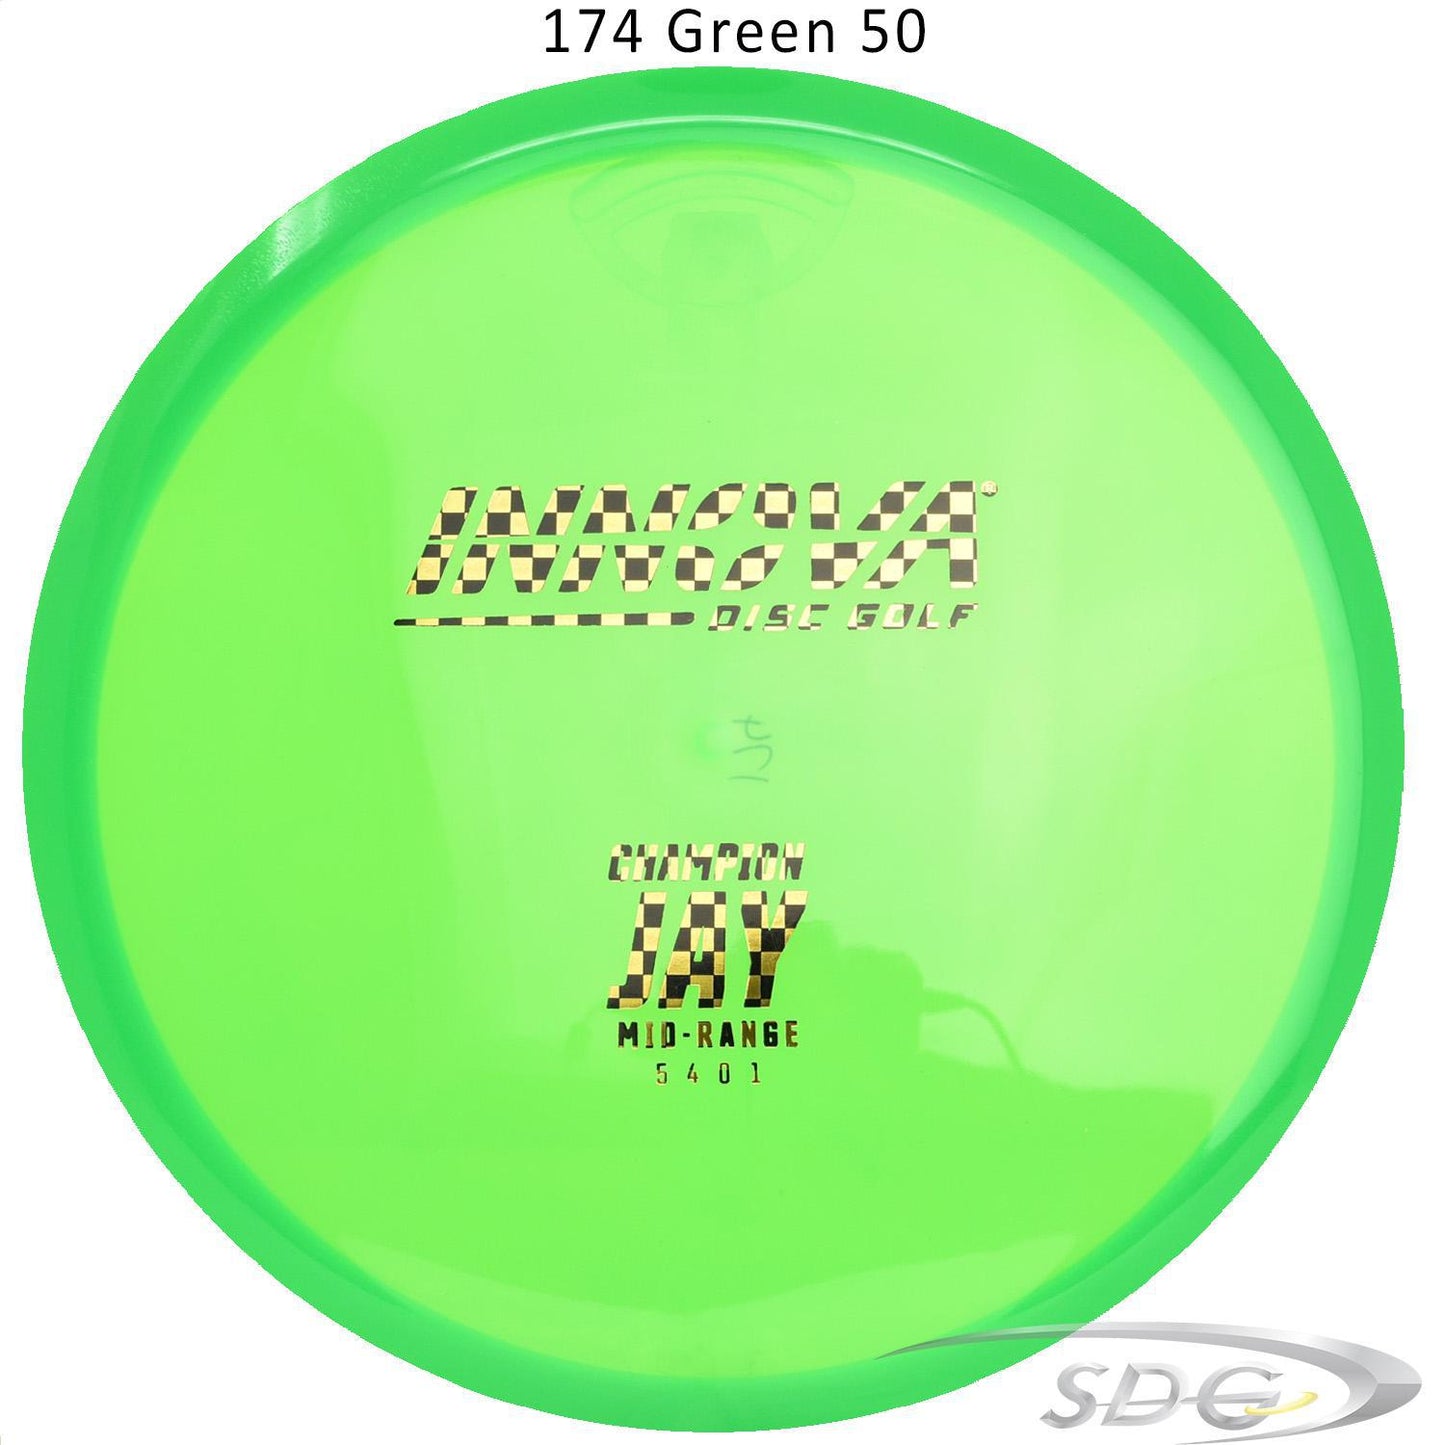 innova-champion-jay-disc-golf-mid-range 174 Green 50 